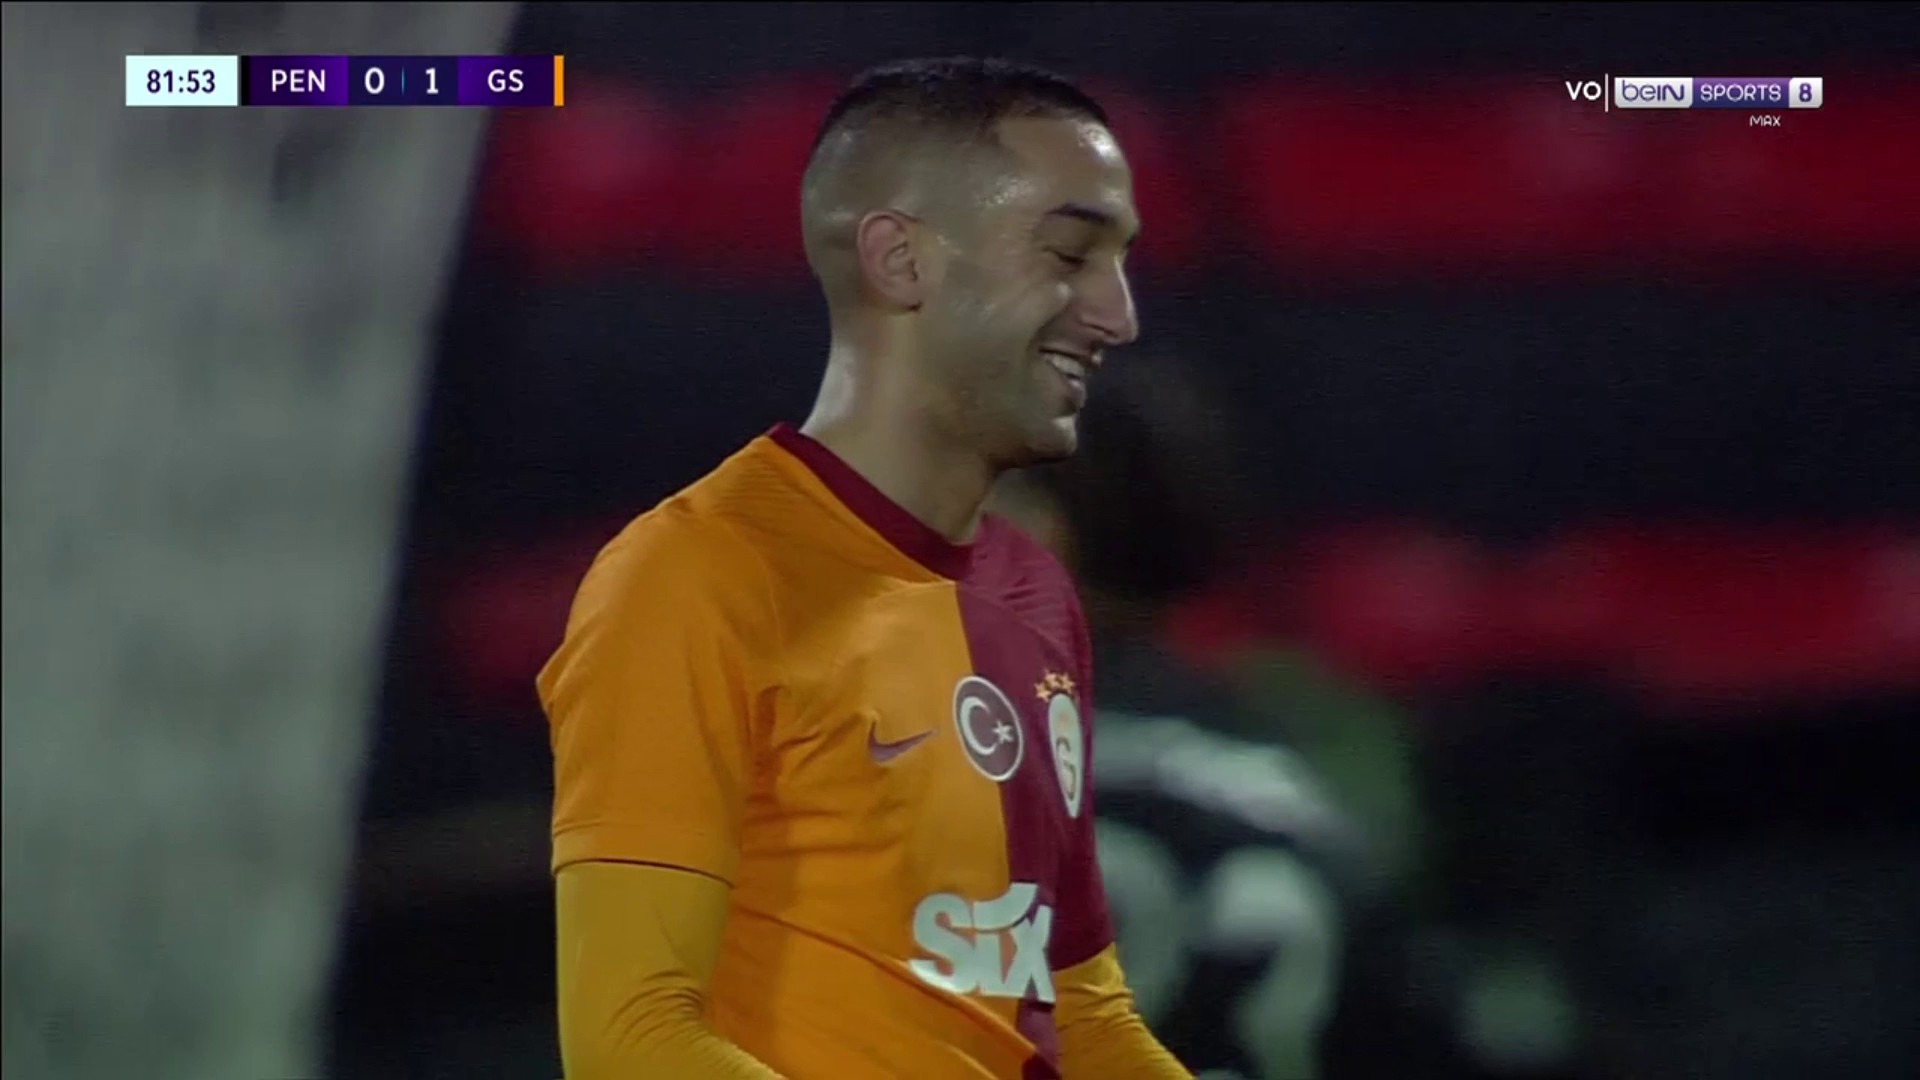 Süper Lig : Hakim Ziyech marque un nouveau banger monstrueux